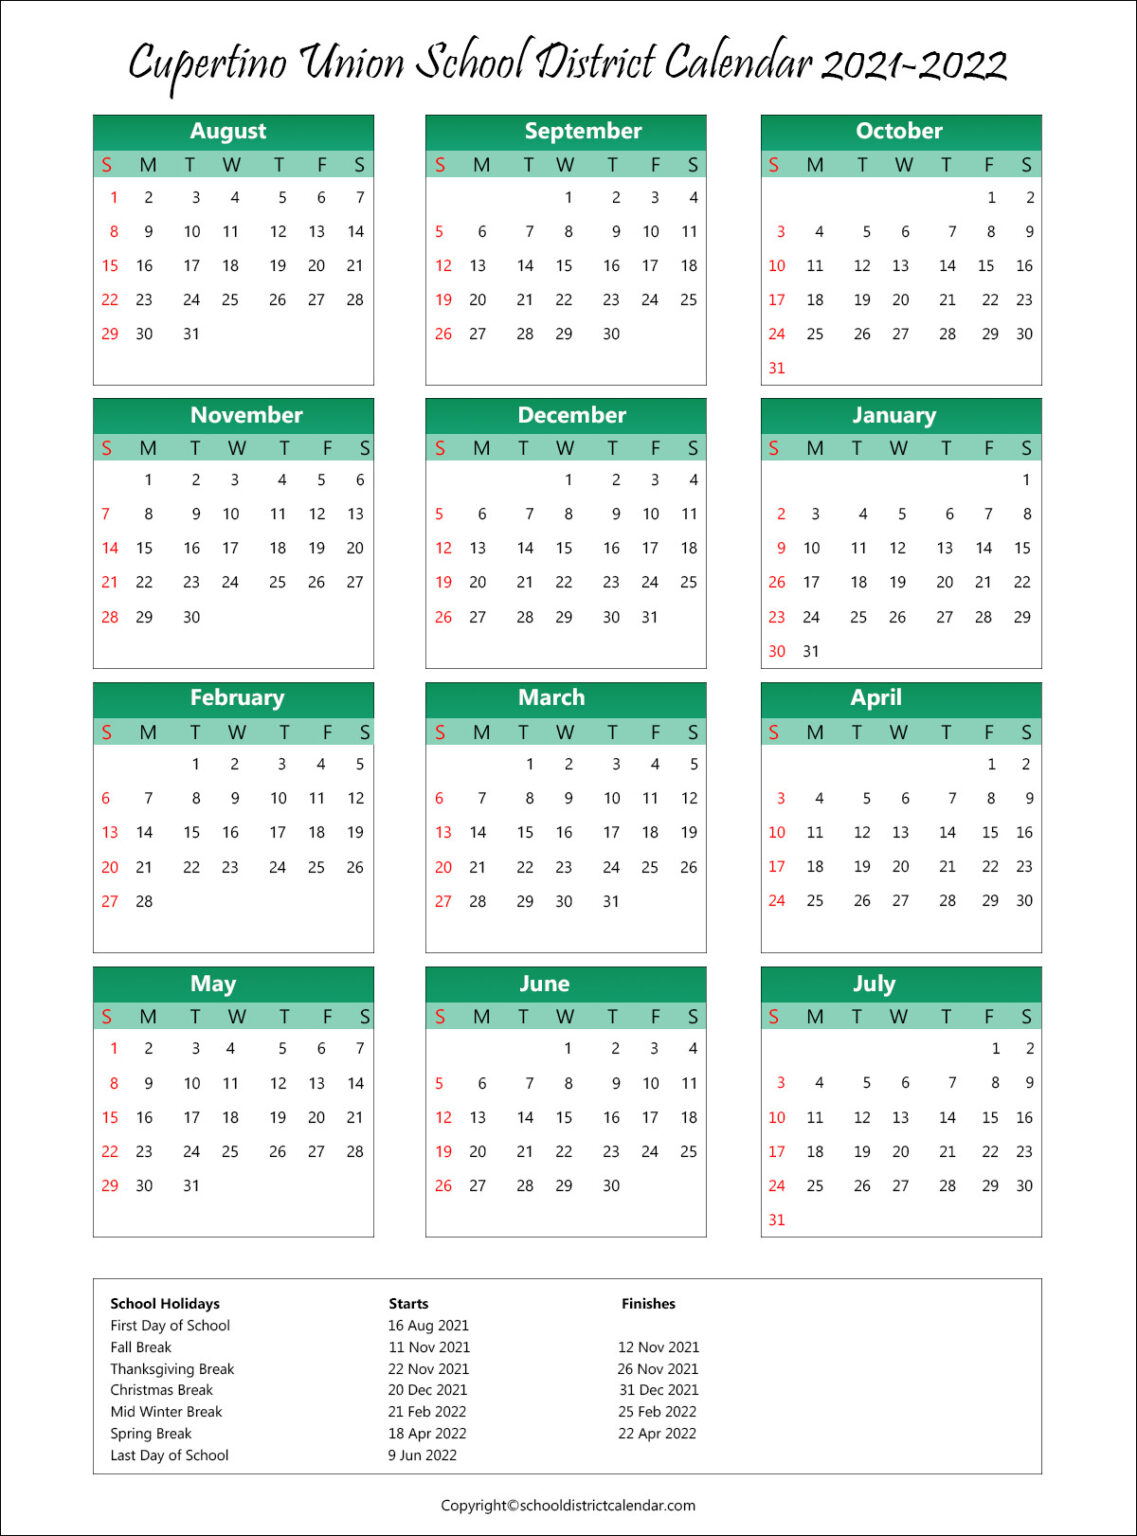 Cupertino Union School District Calendar Holidays 20212022